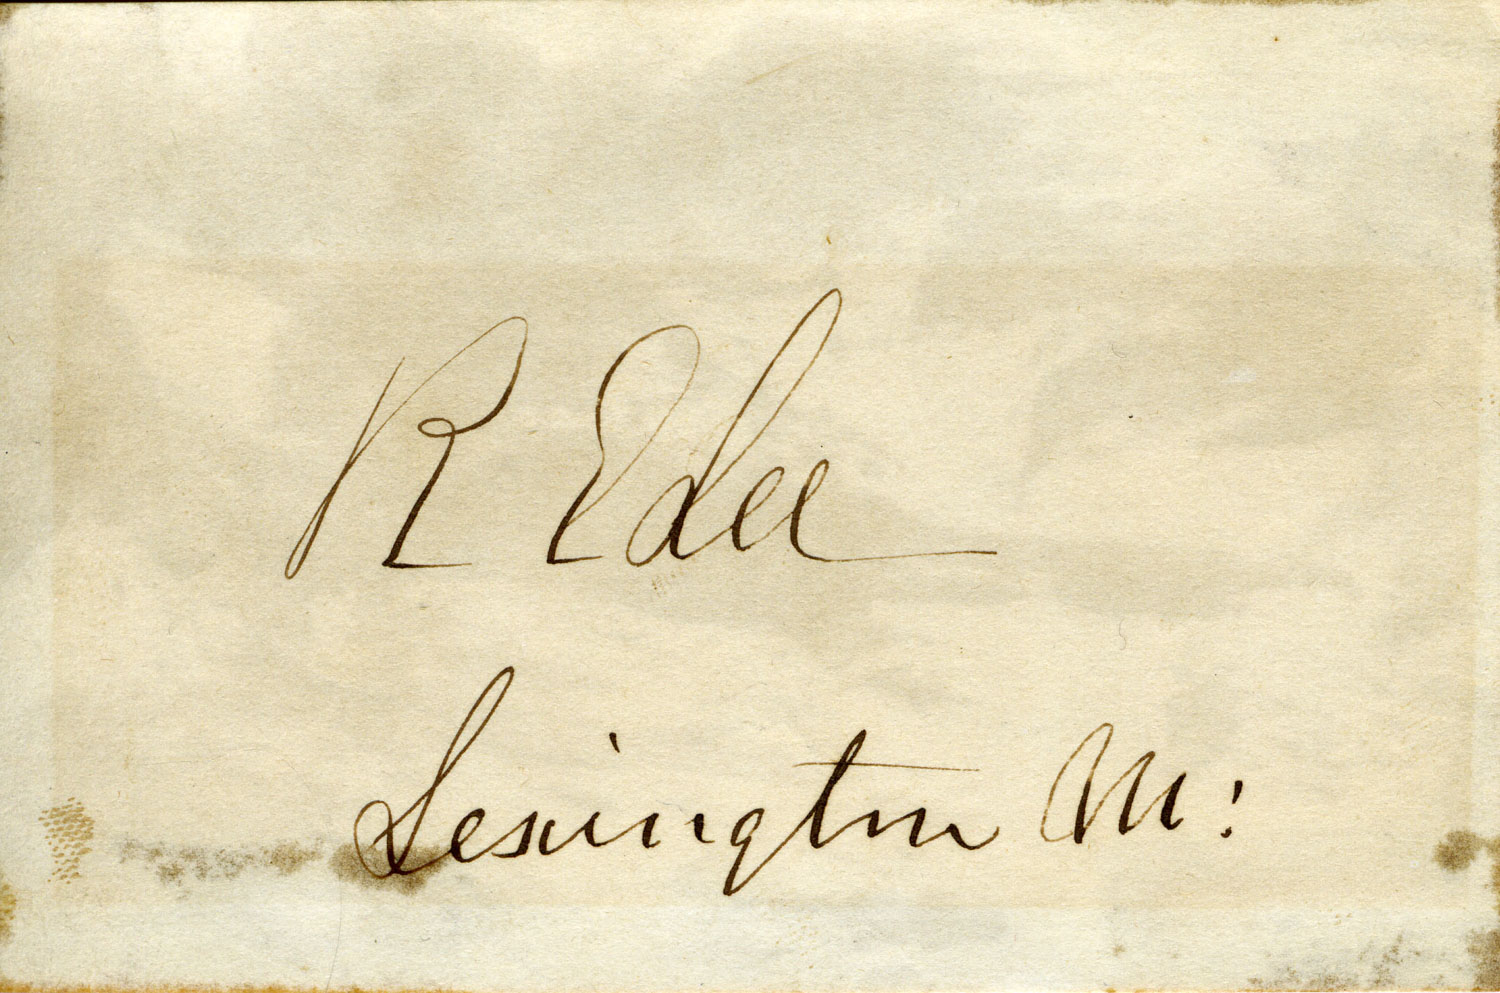 Robert E. Lee Signature